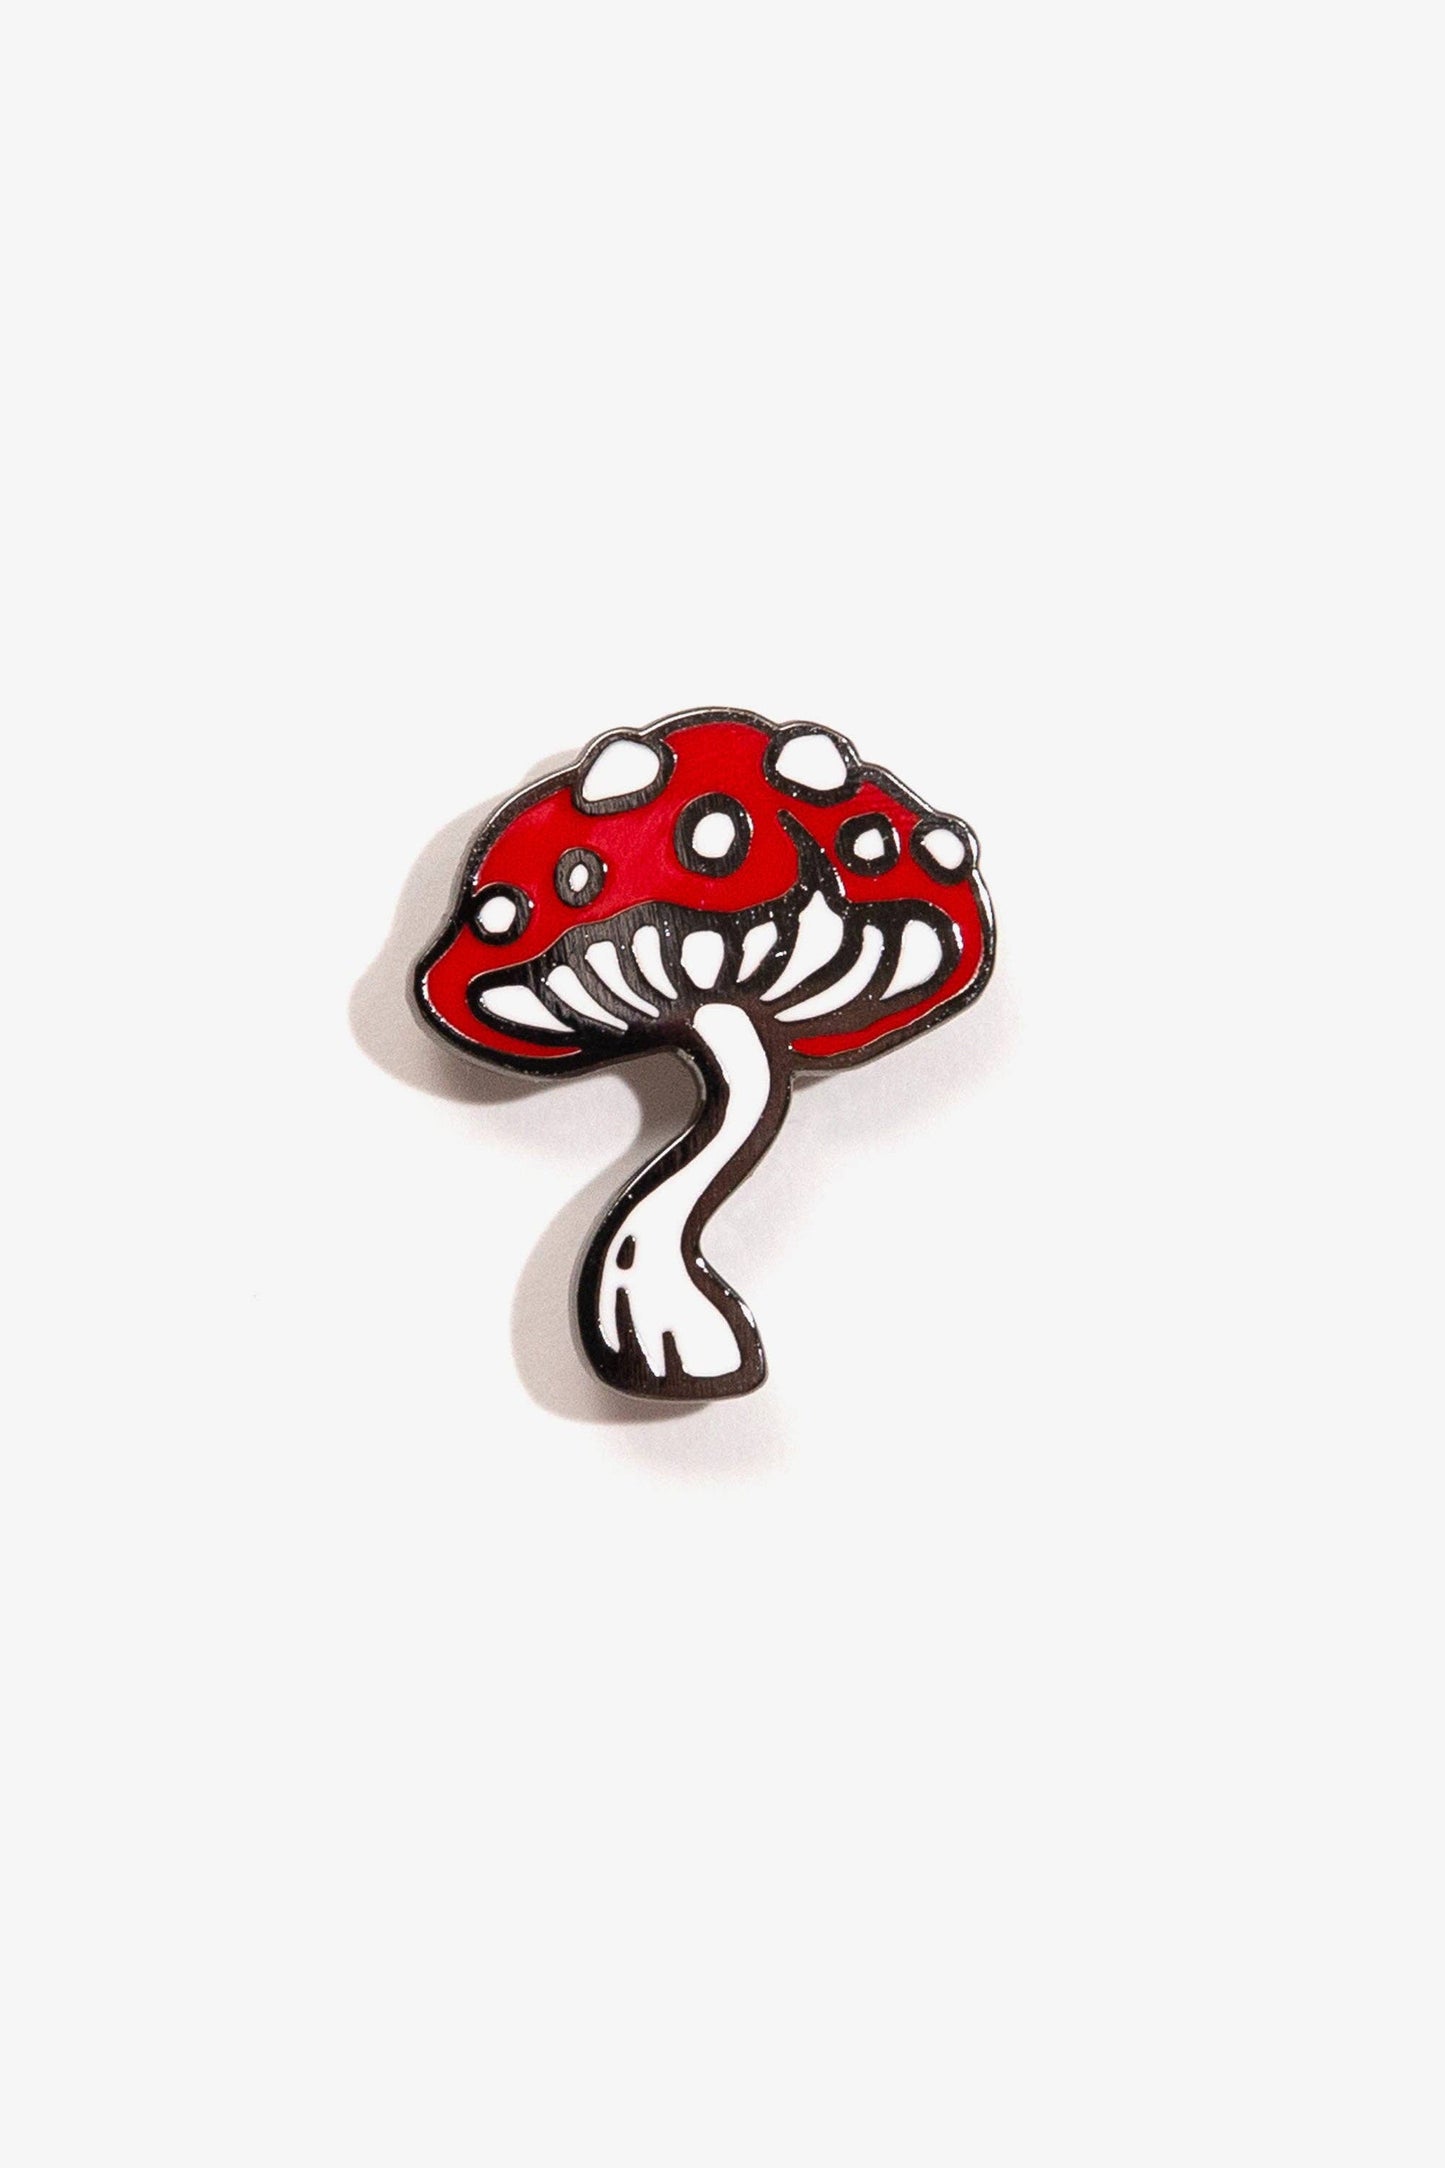 Amanita Mushroom Enamel Pin